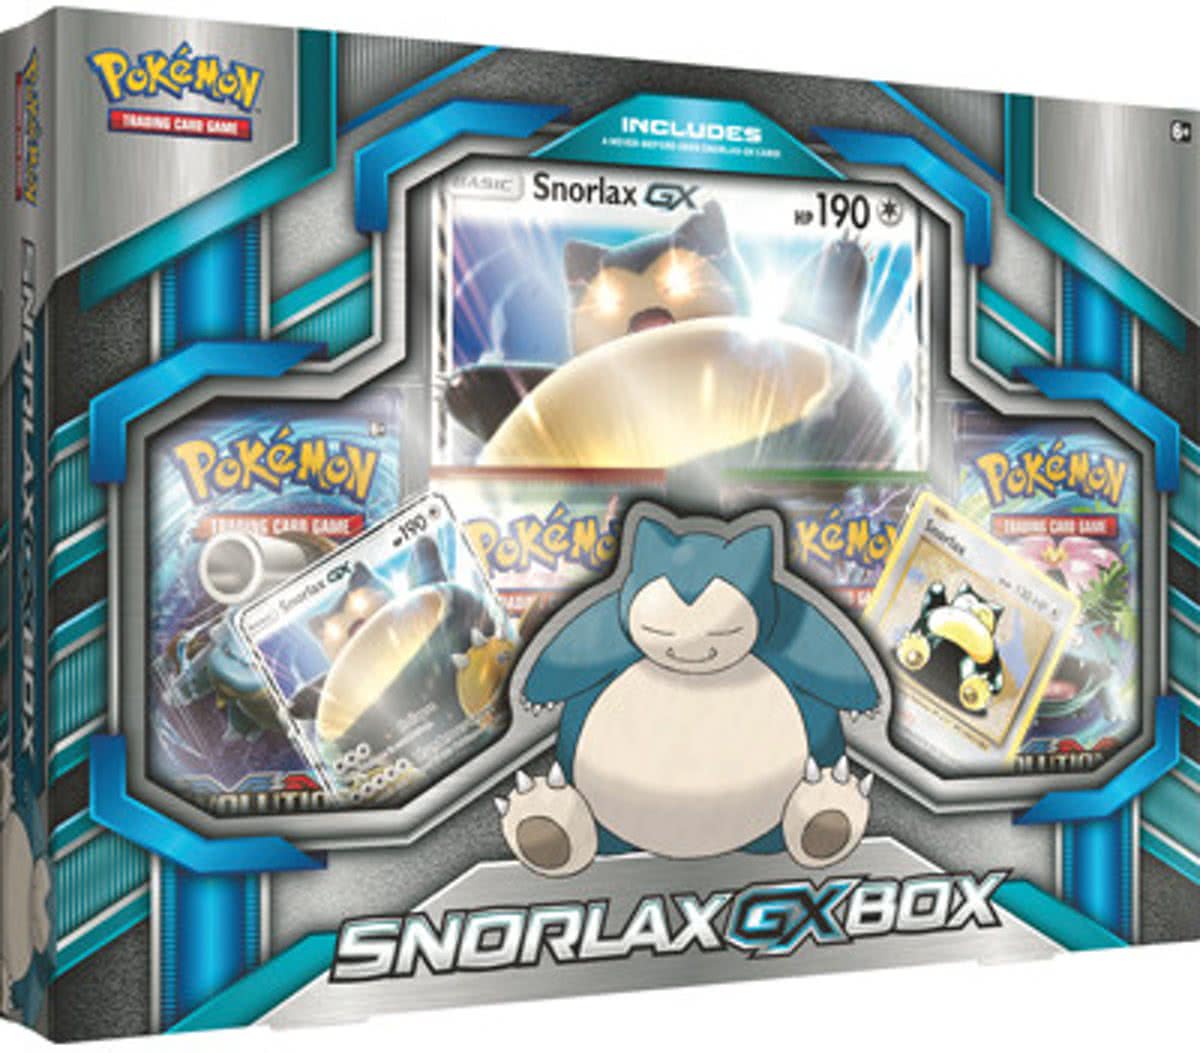 Pokemon Collection Box: Snorlax-GX (Pokemon), The Pokemon Company